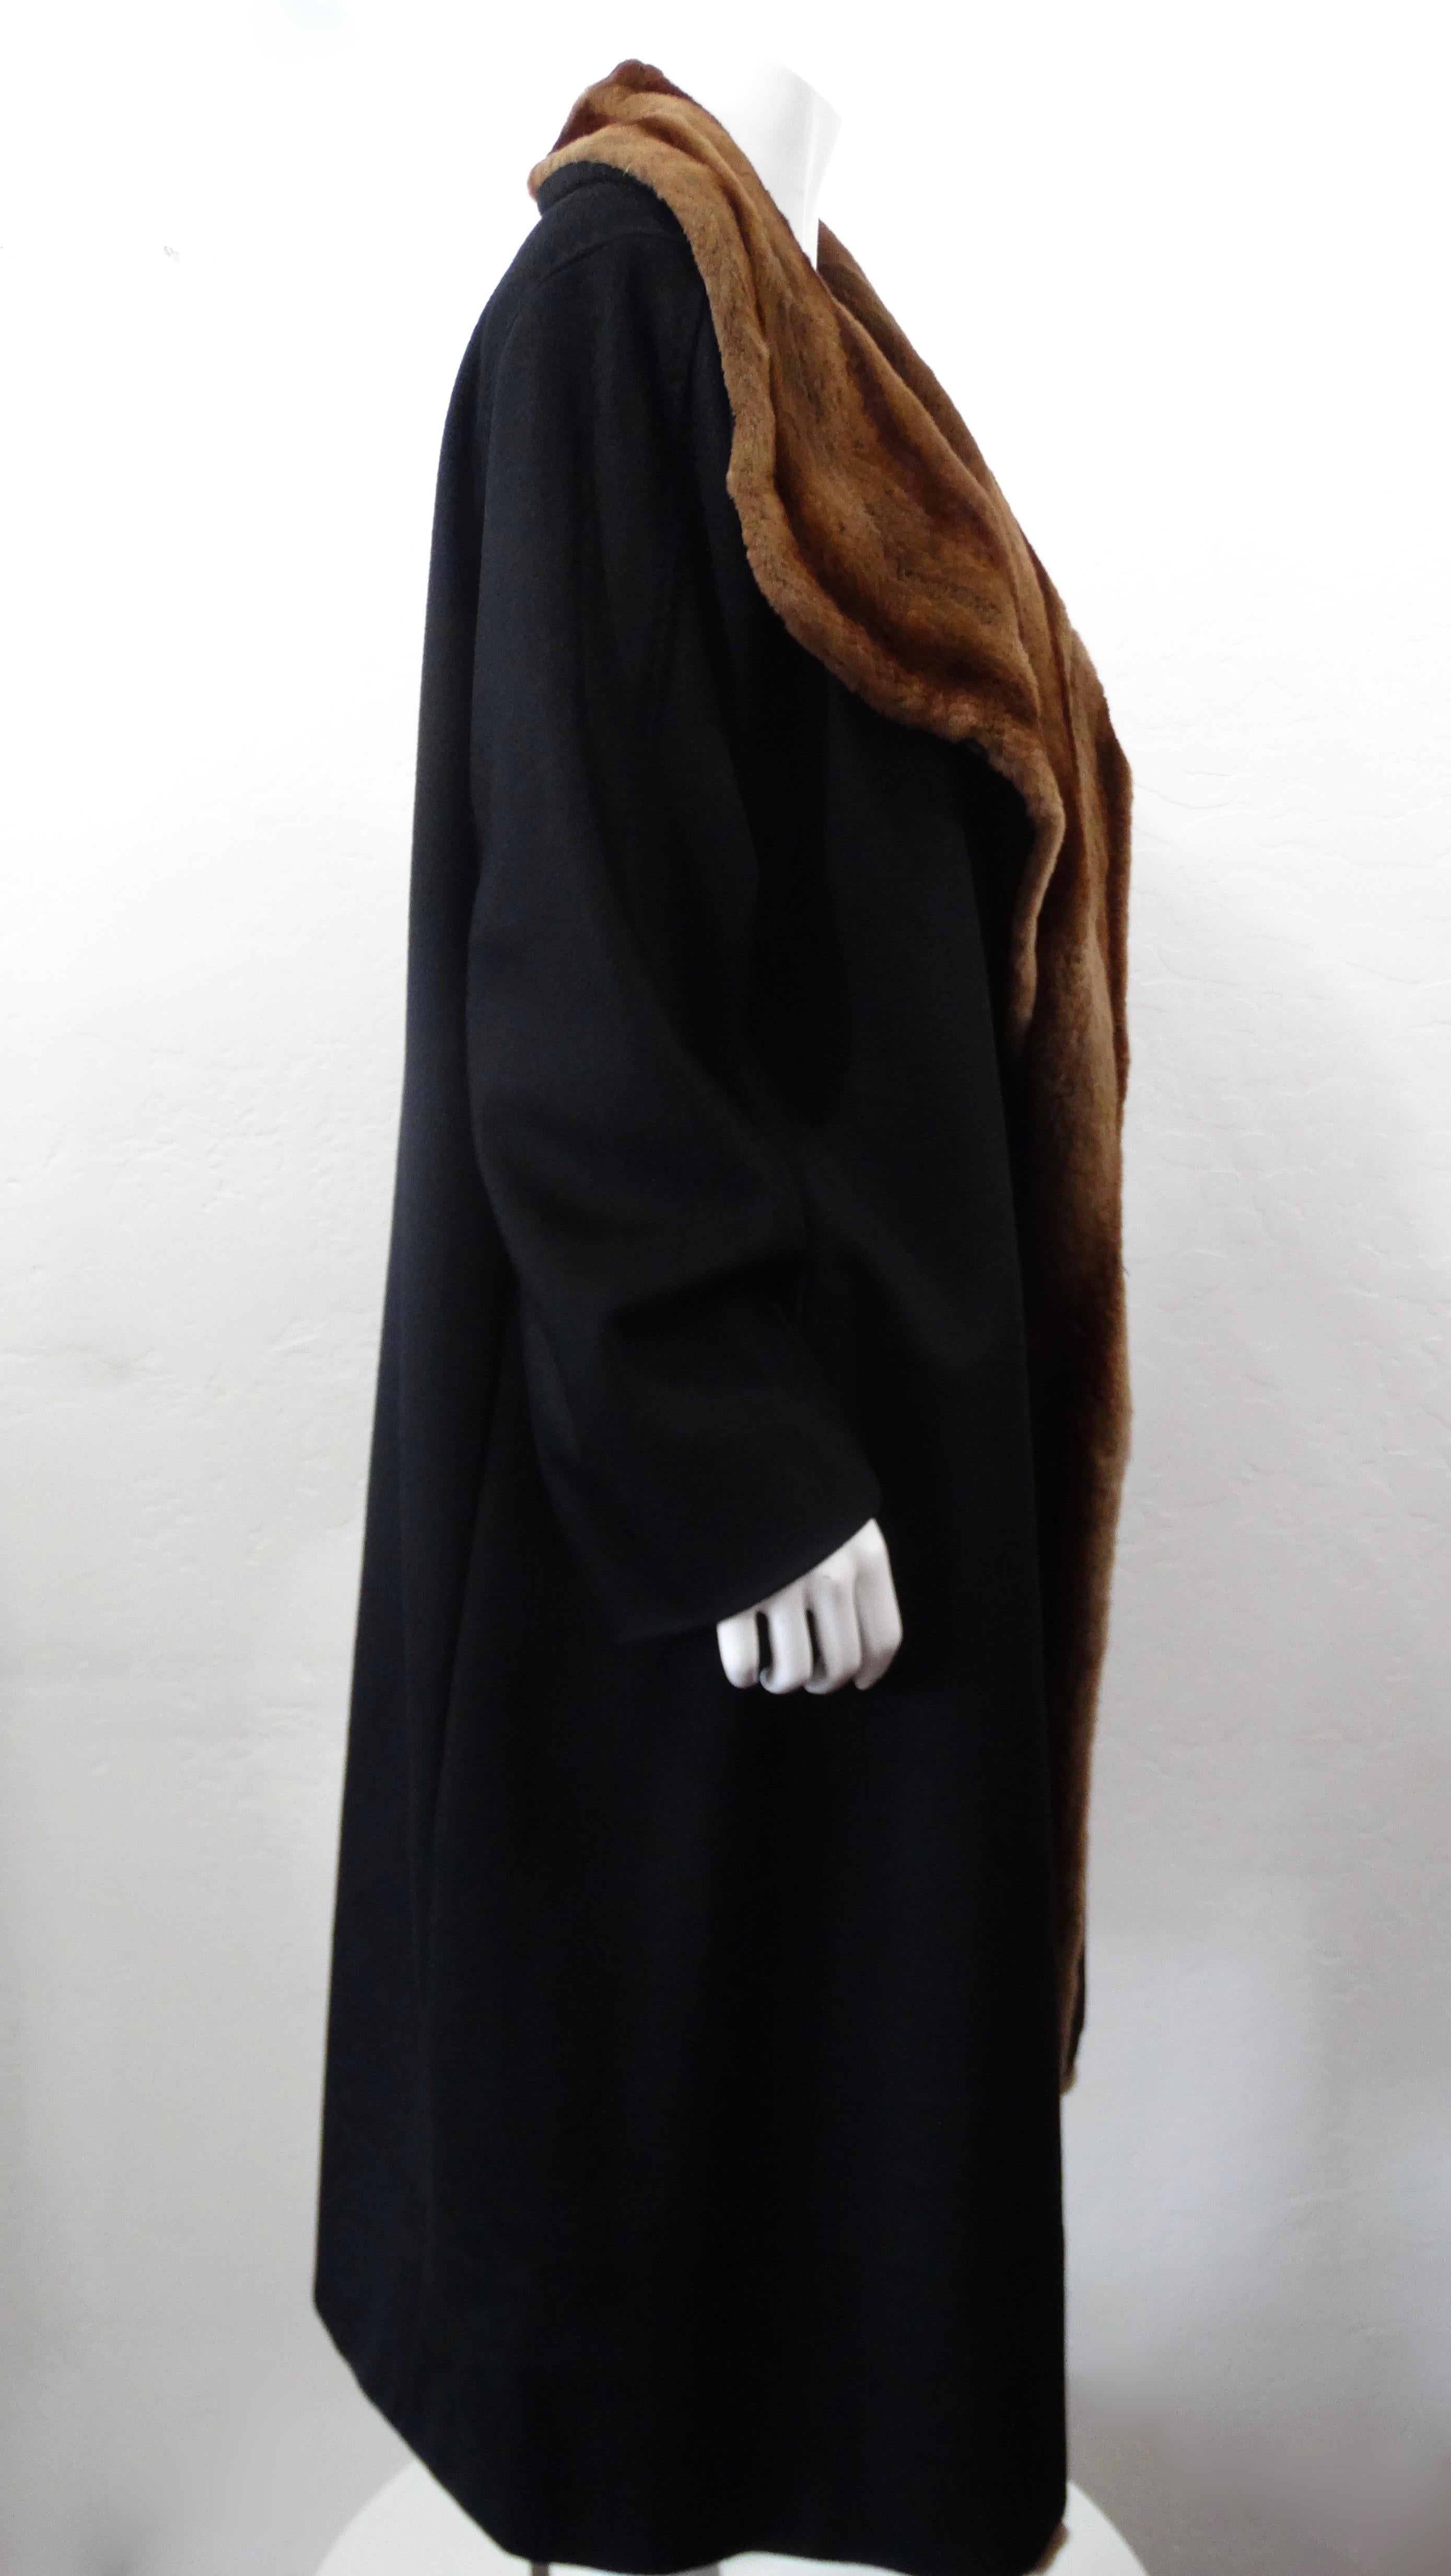  MaxMara Late 20th Century Black Cashmere & Mink Fur Coat  2